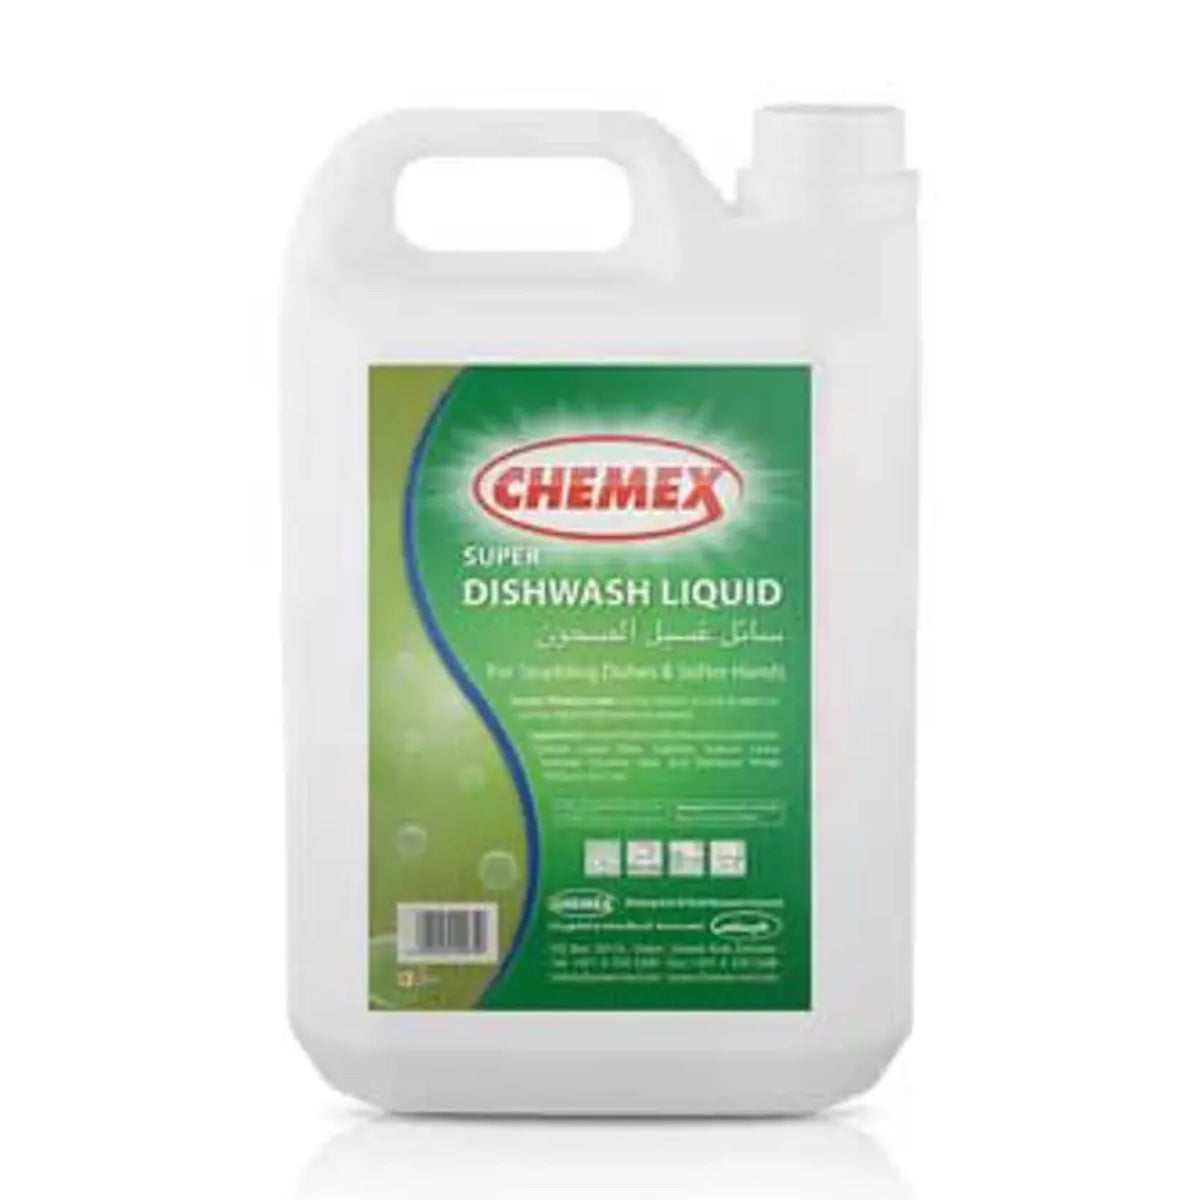 Chemex Liquid Diswash SUPER, 5 liter